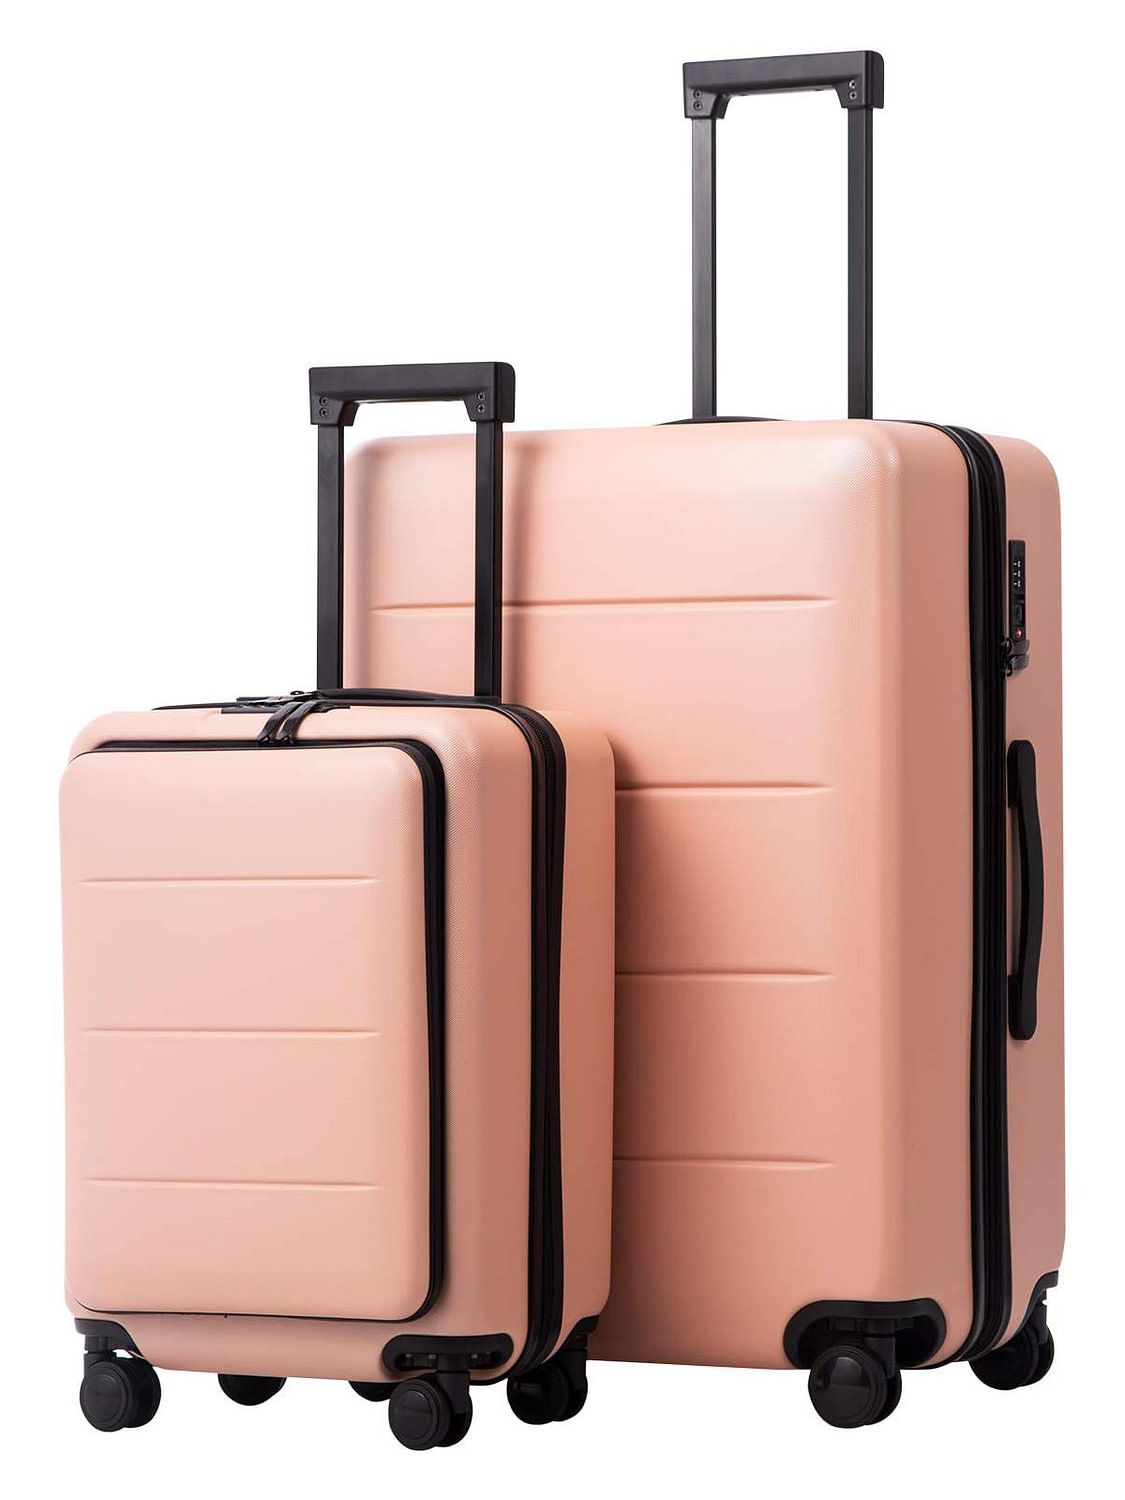 COOLIFE Luggage Suitcase Piece Set